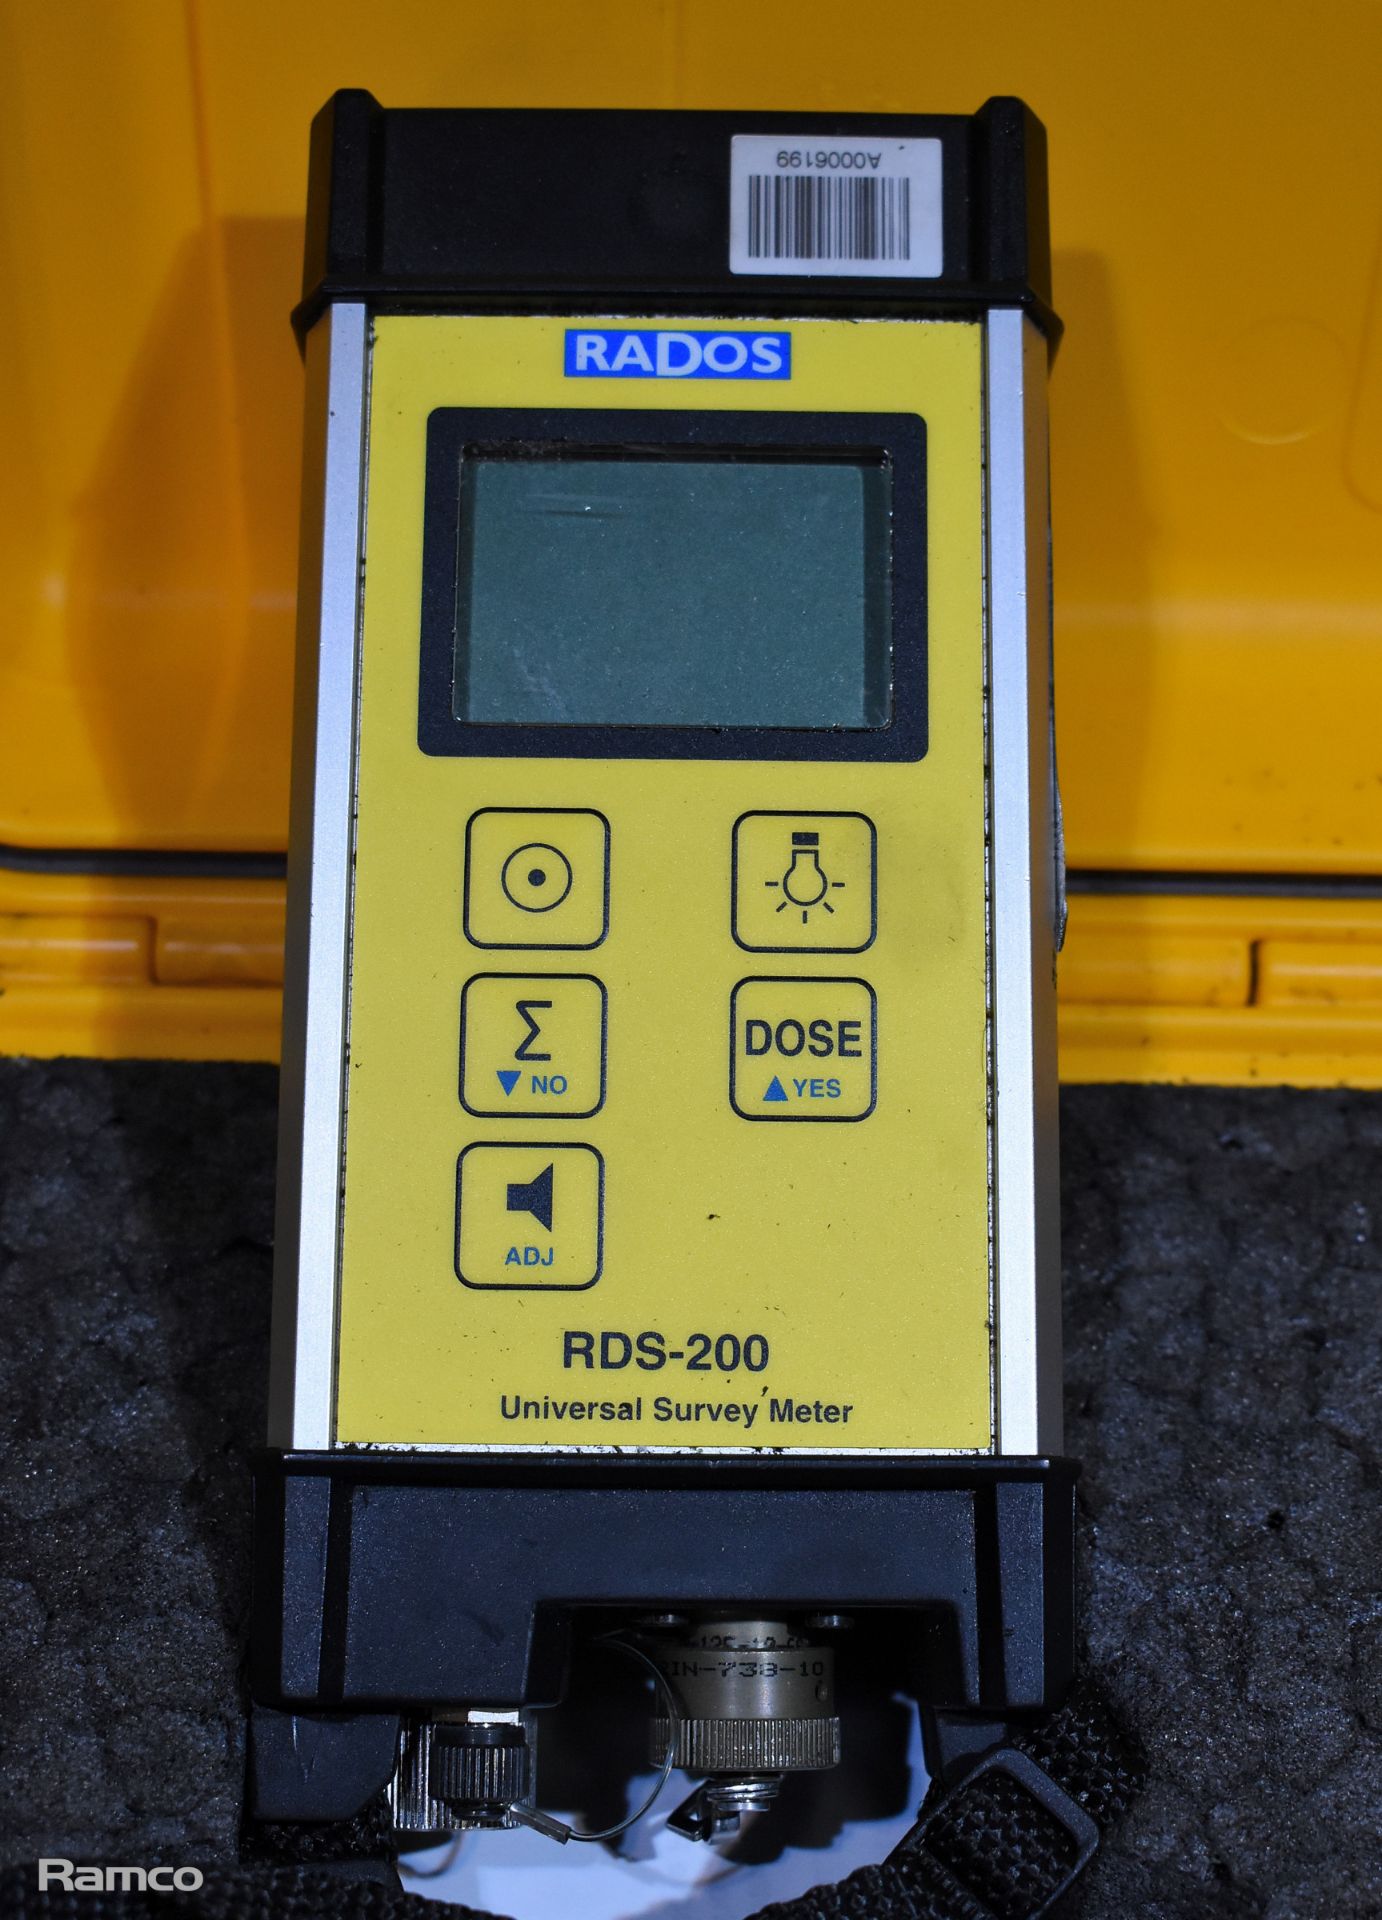 Rados RDS-200 universal survey meter, Rados GMP-11 sensor, 2x Siemens MK2.3 dosimeters - Bild 3 aus 10